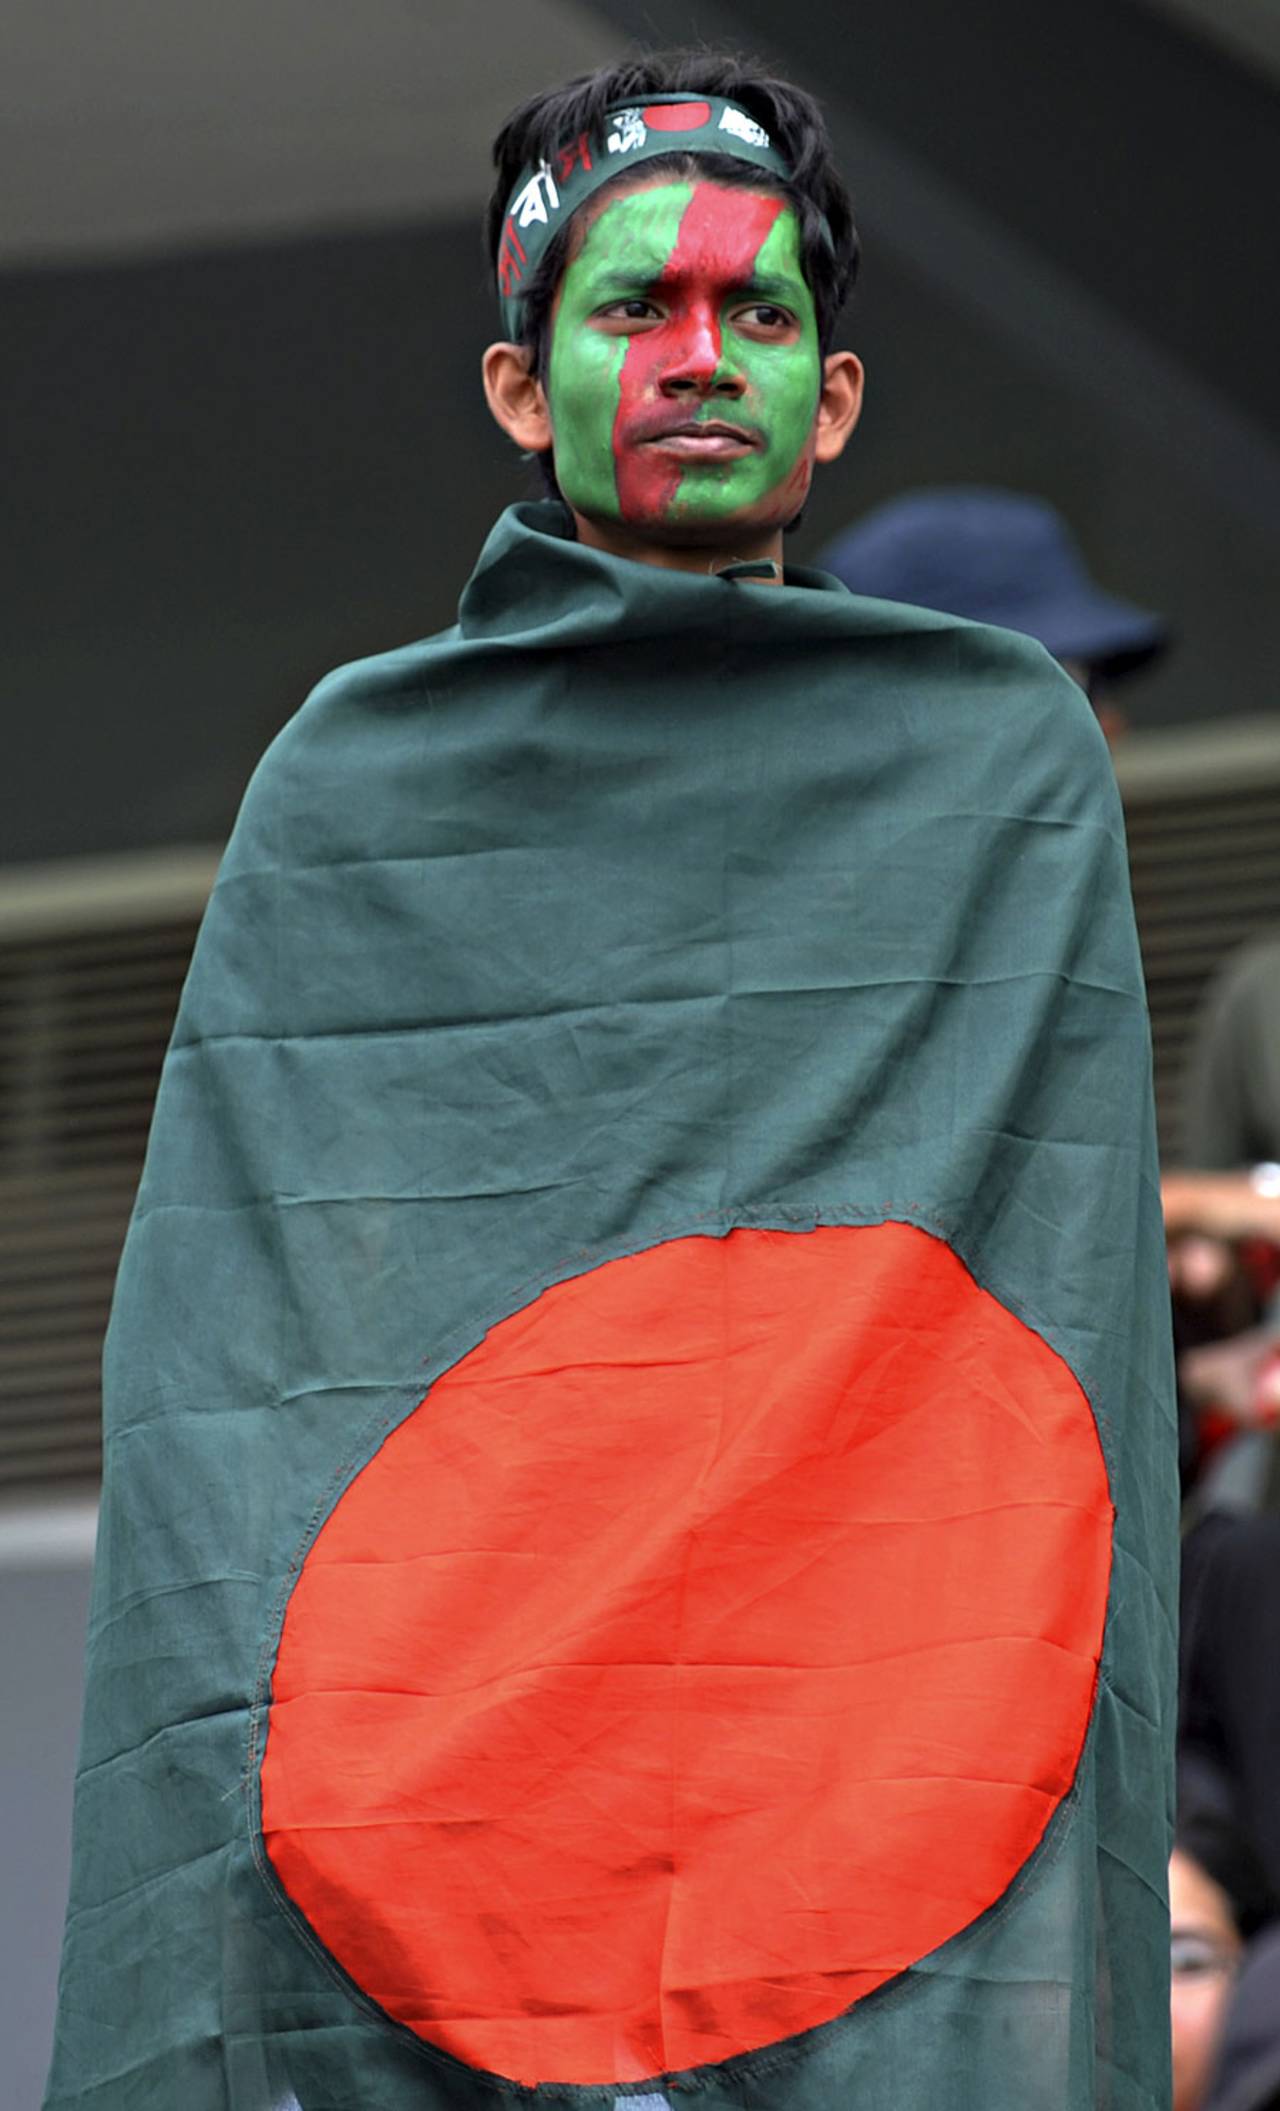 Delirium derived from joy is always fleeting for the ever-faithful Bangladesh fan&nbsp;&nbsp;&bull;&nbsp;&nbsp;Associated Press